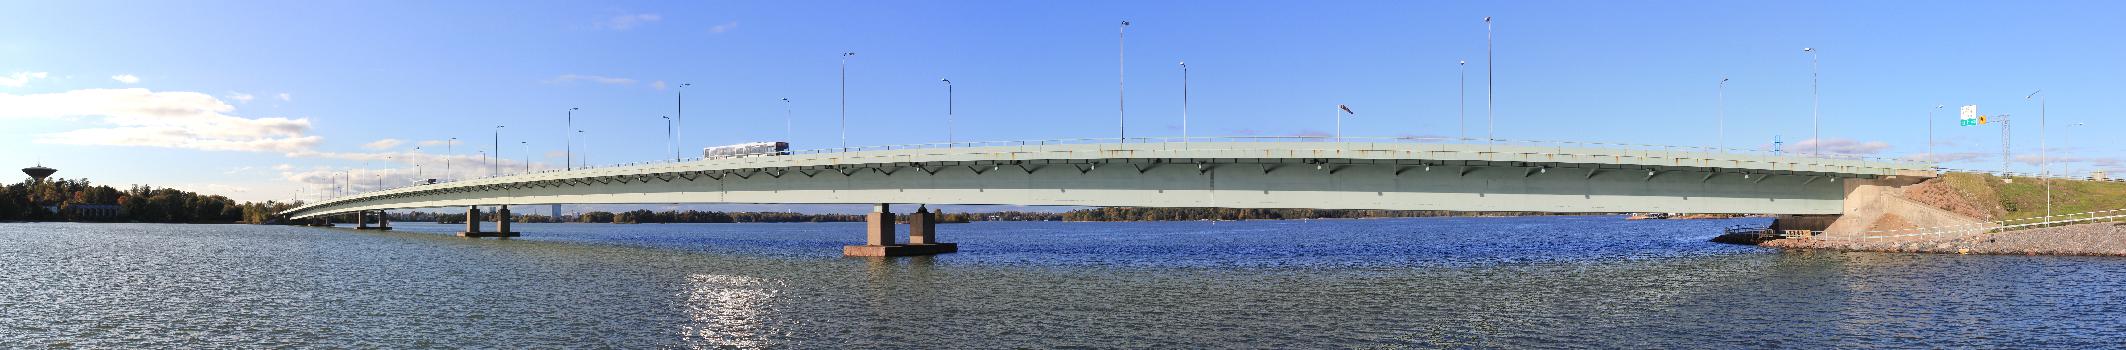 Lapinlahti-Brücke